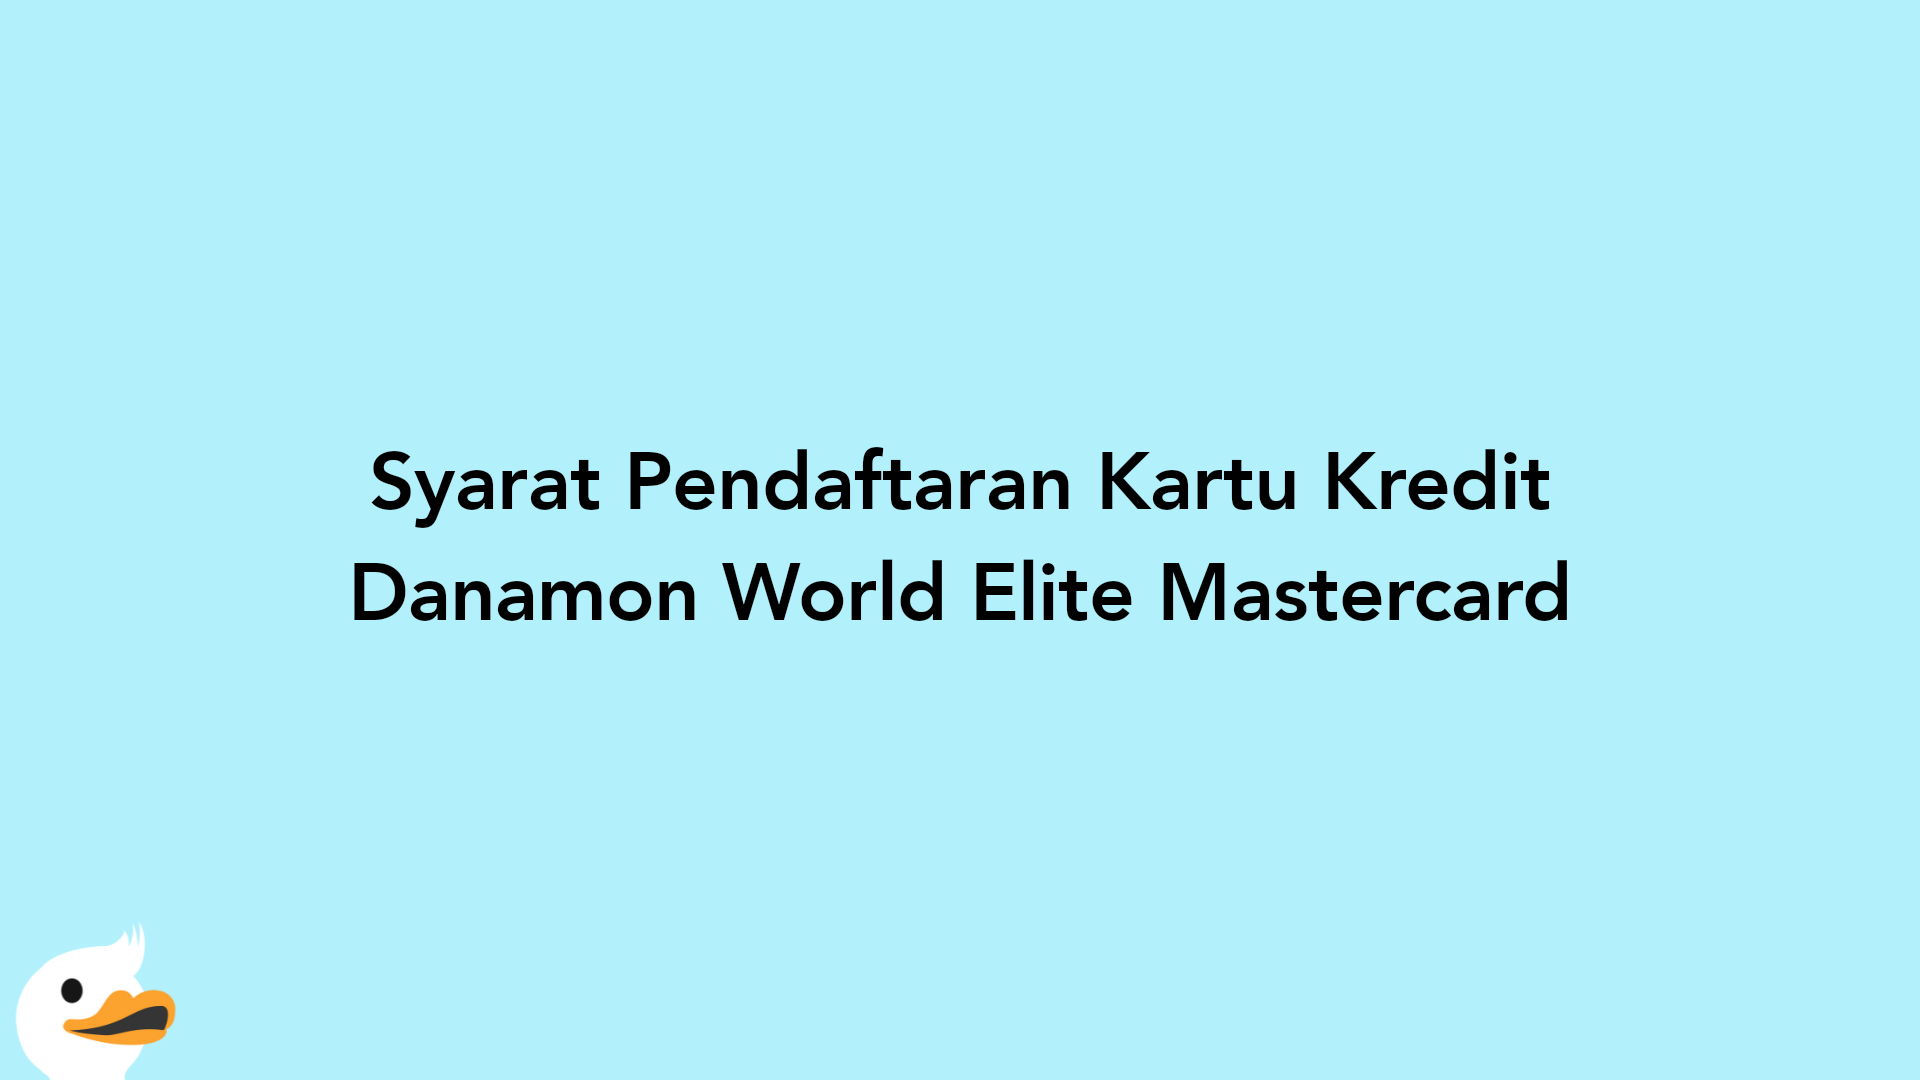 Syarat Pendaftaran Kartu Kredit Danamon World Elite Mastercard